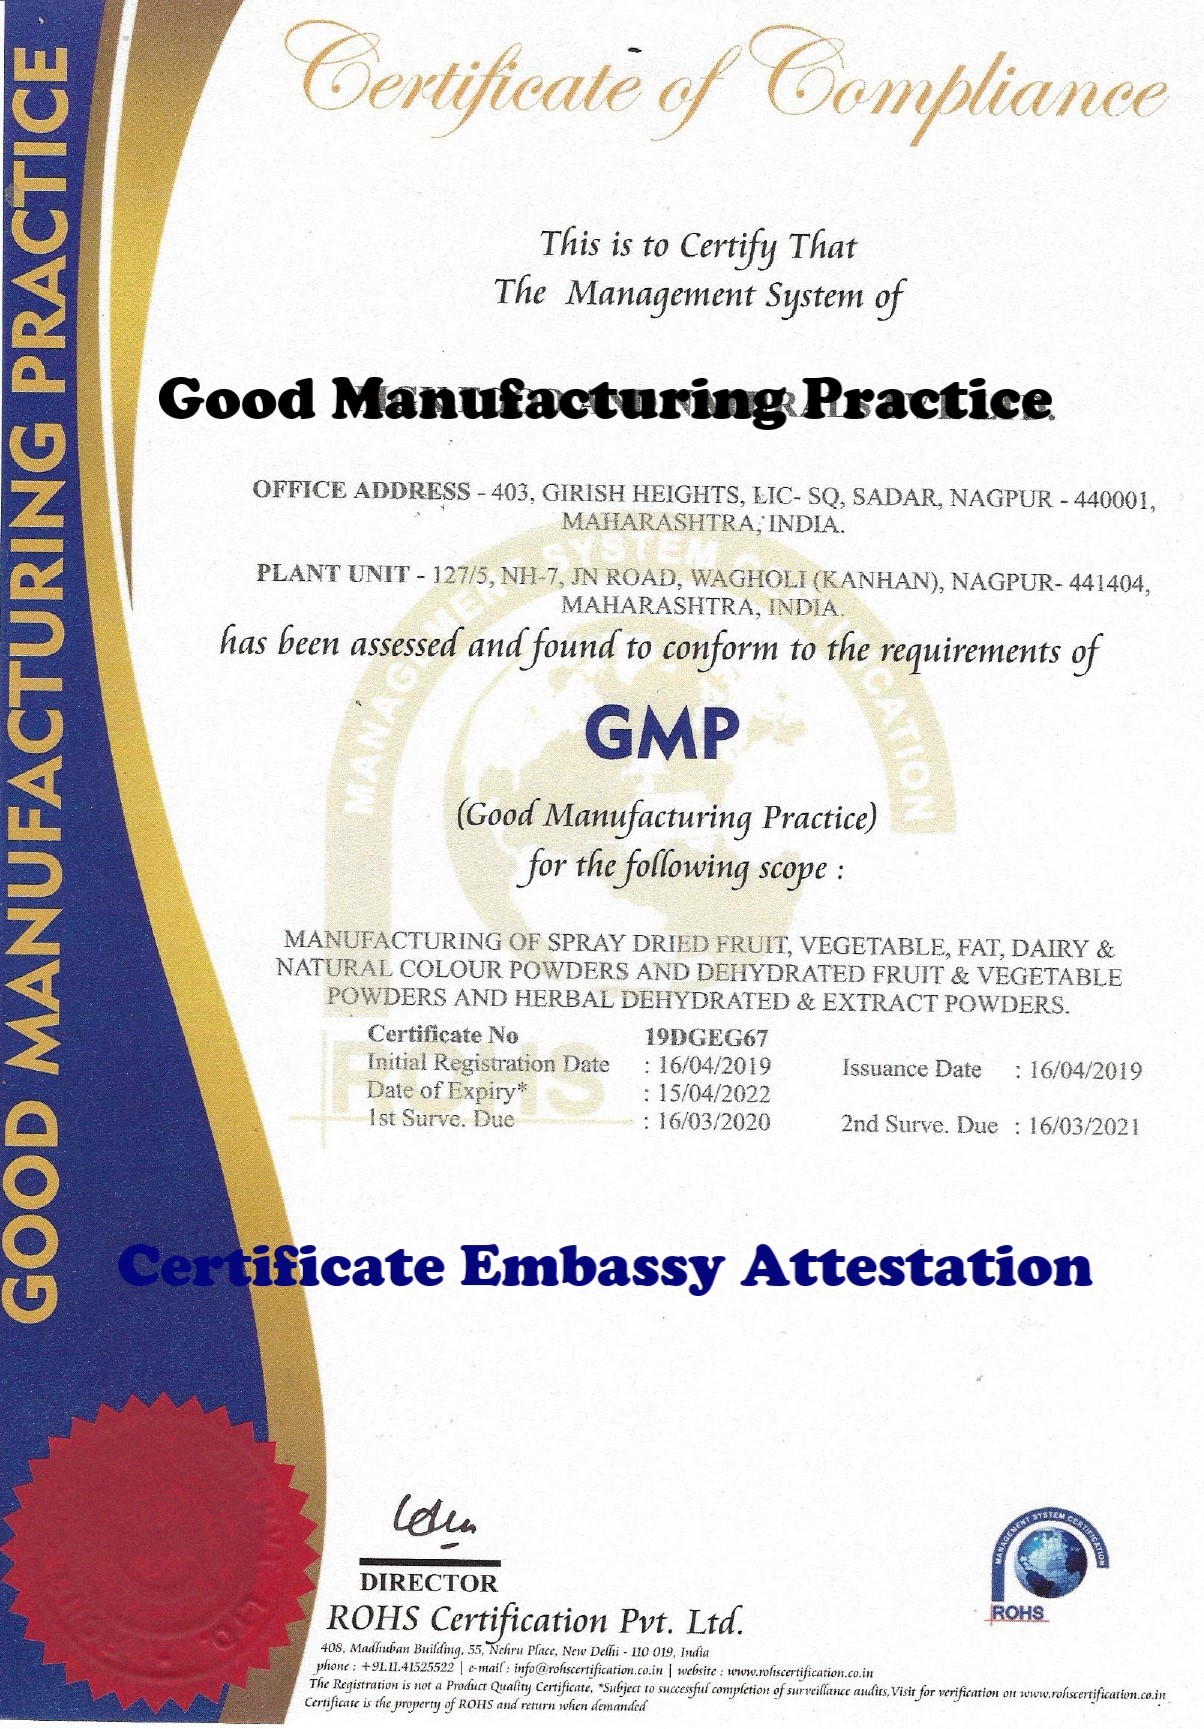 GMP Certificate Attestation from Tajikistan Embassy